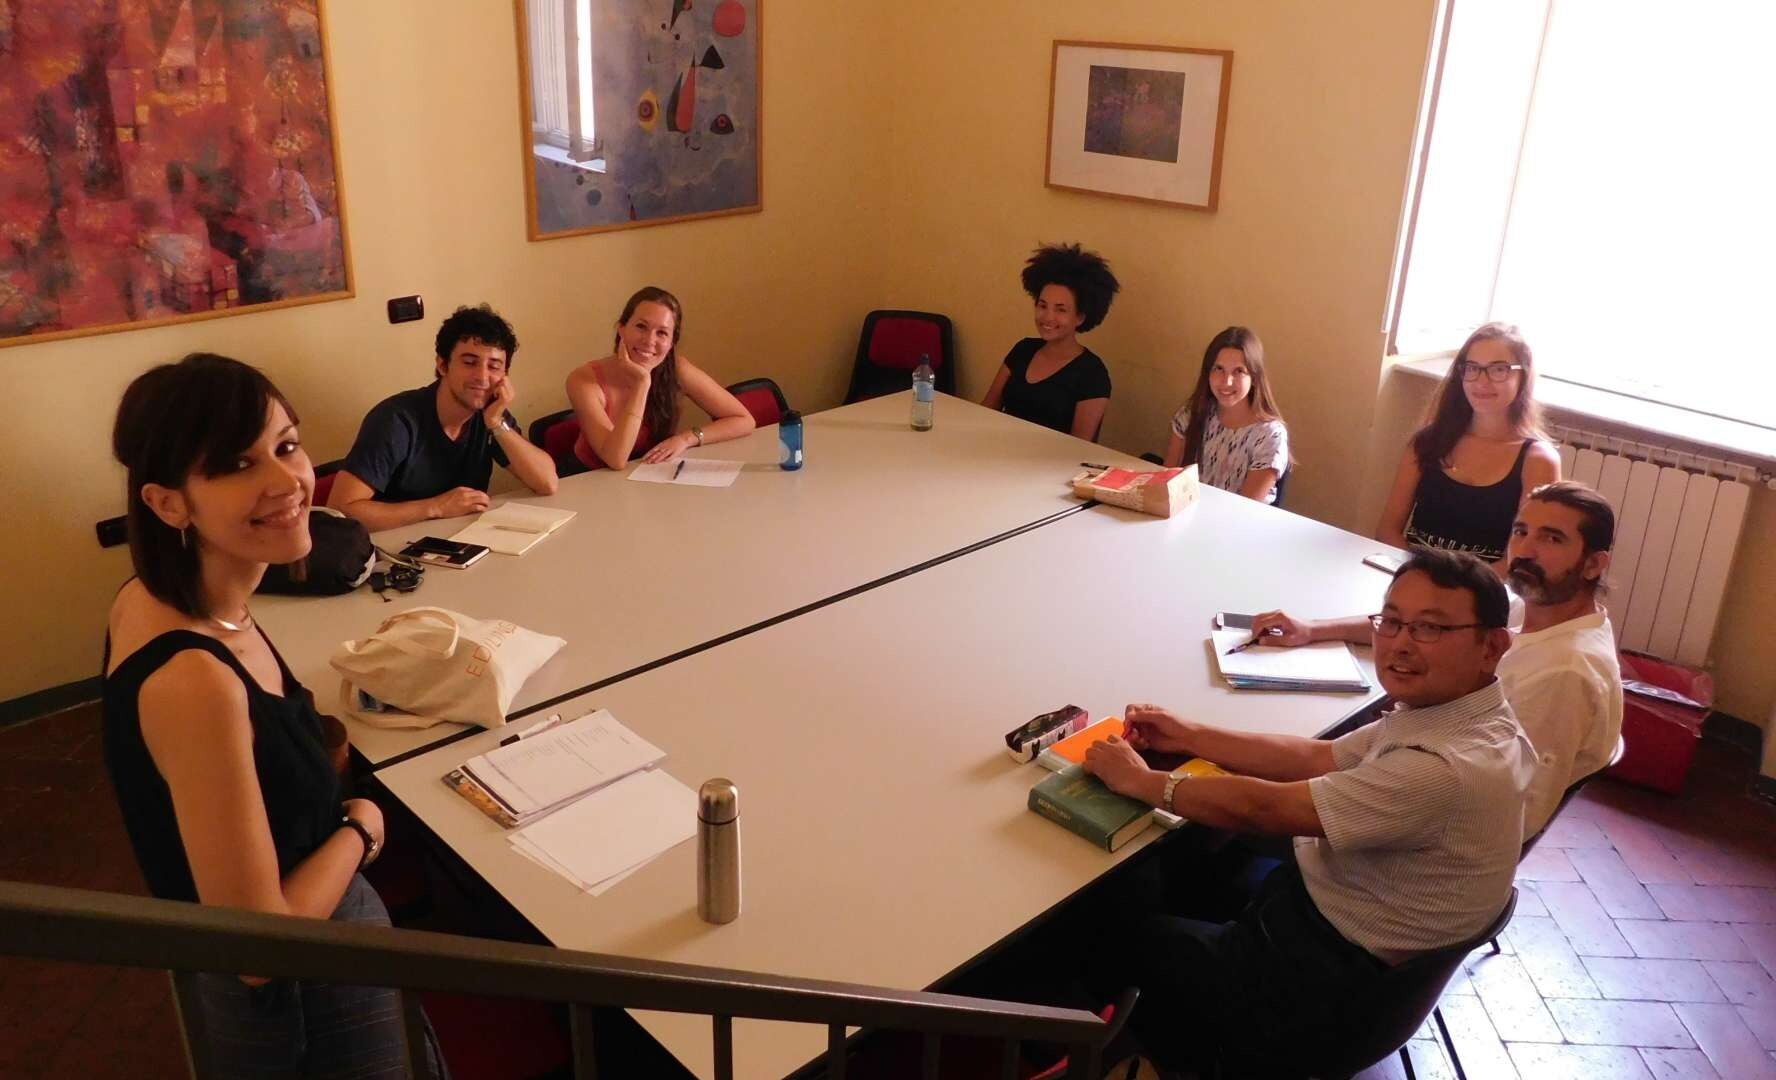 Students in a language class at Parola Italian language school